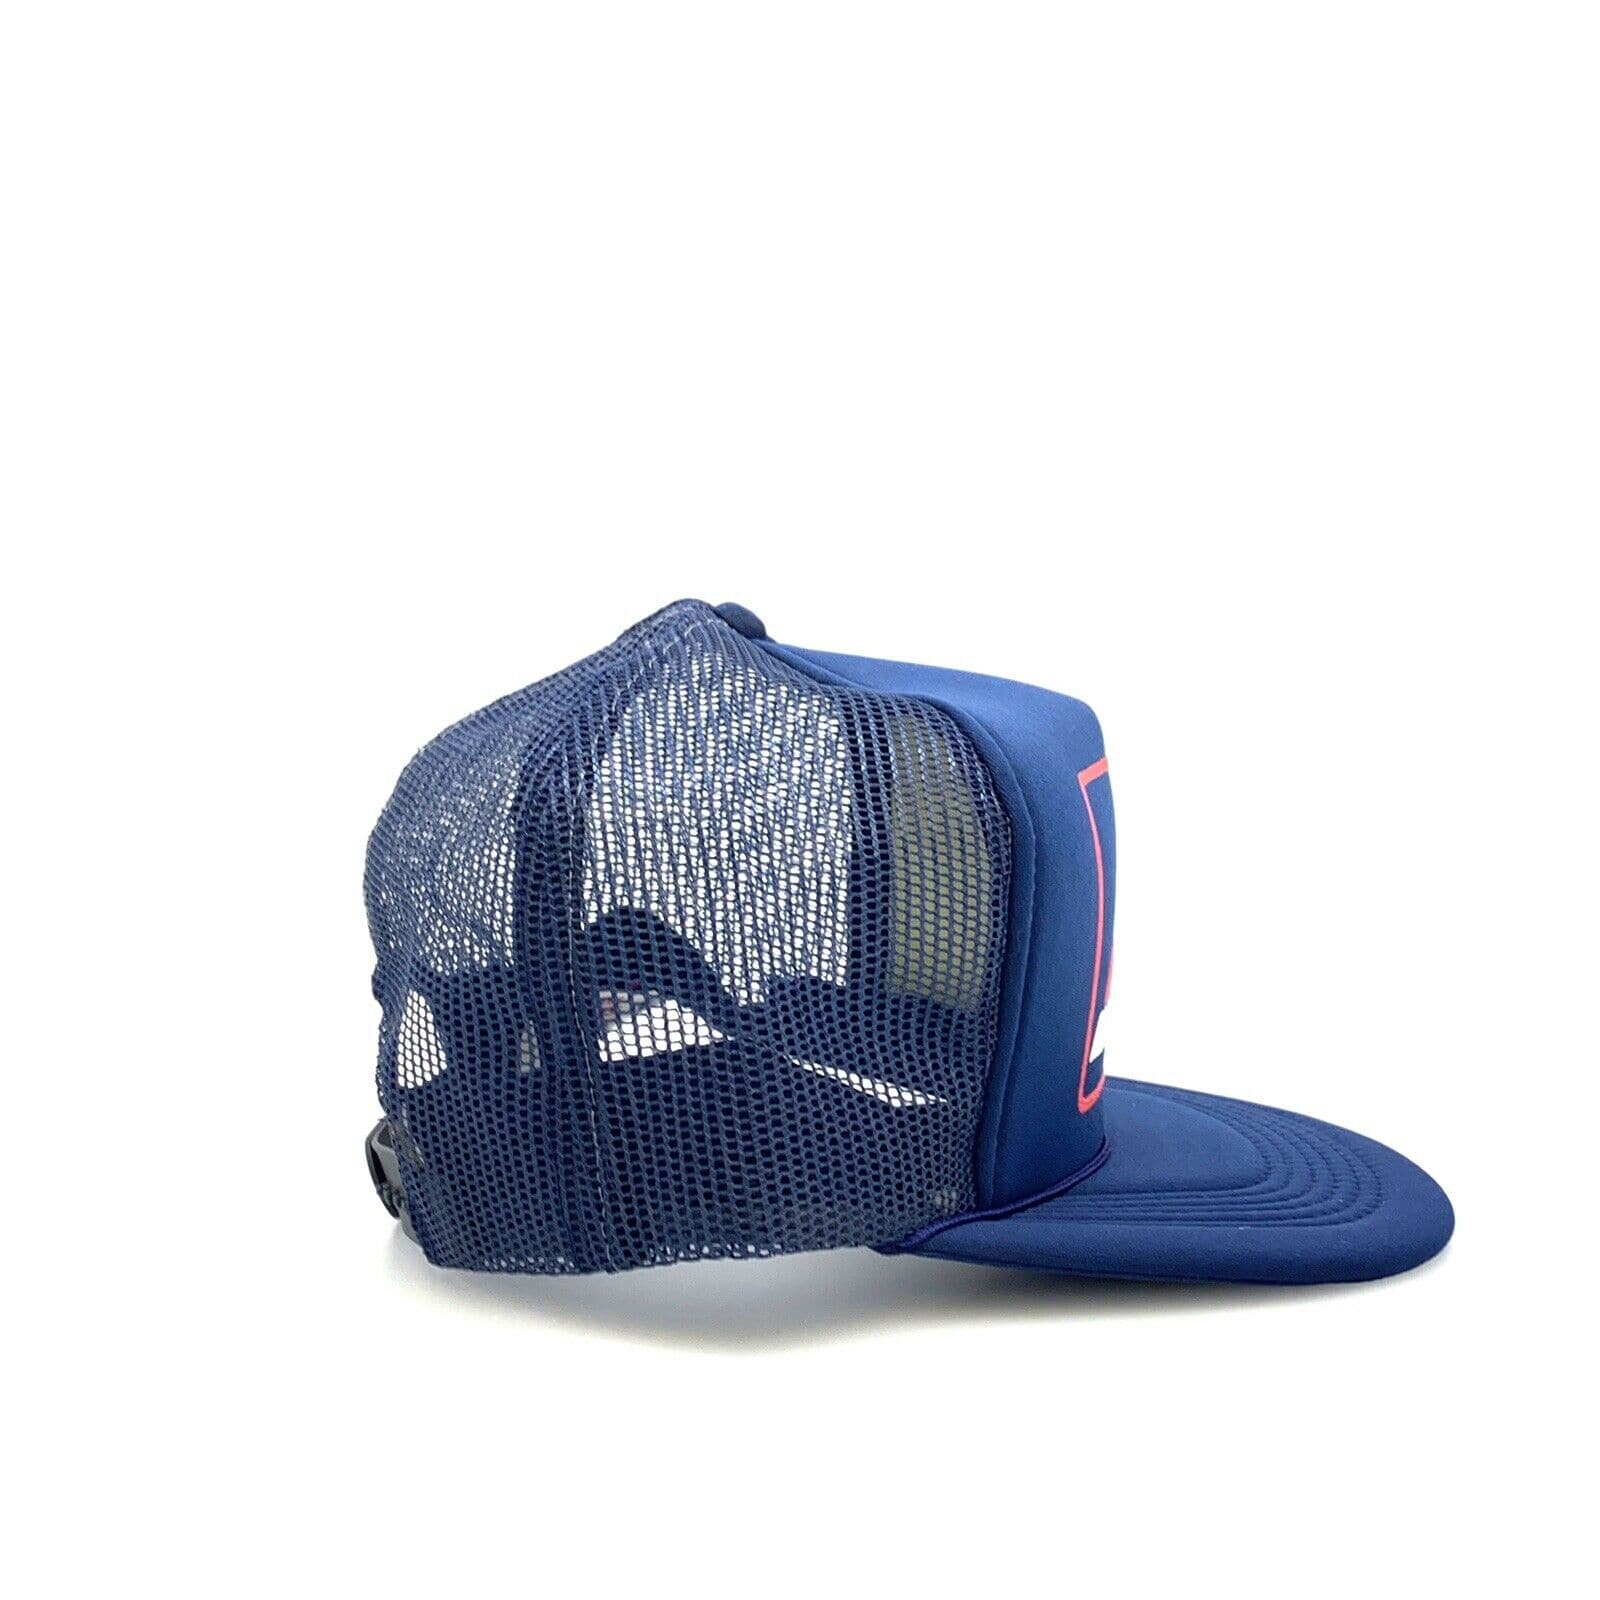 VTG ALUMACRAFT SnapBack Mesh Trucker Hat, BLUE - Adjustable - parsimonyshoppes